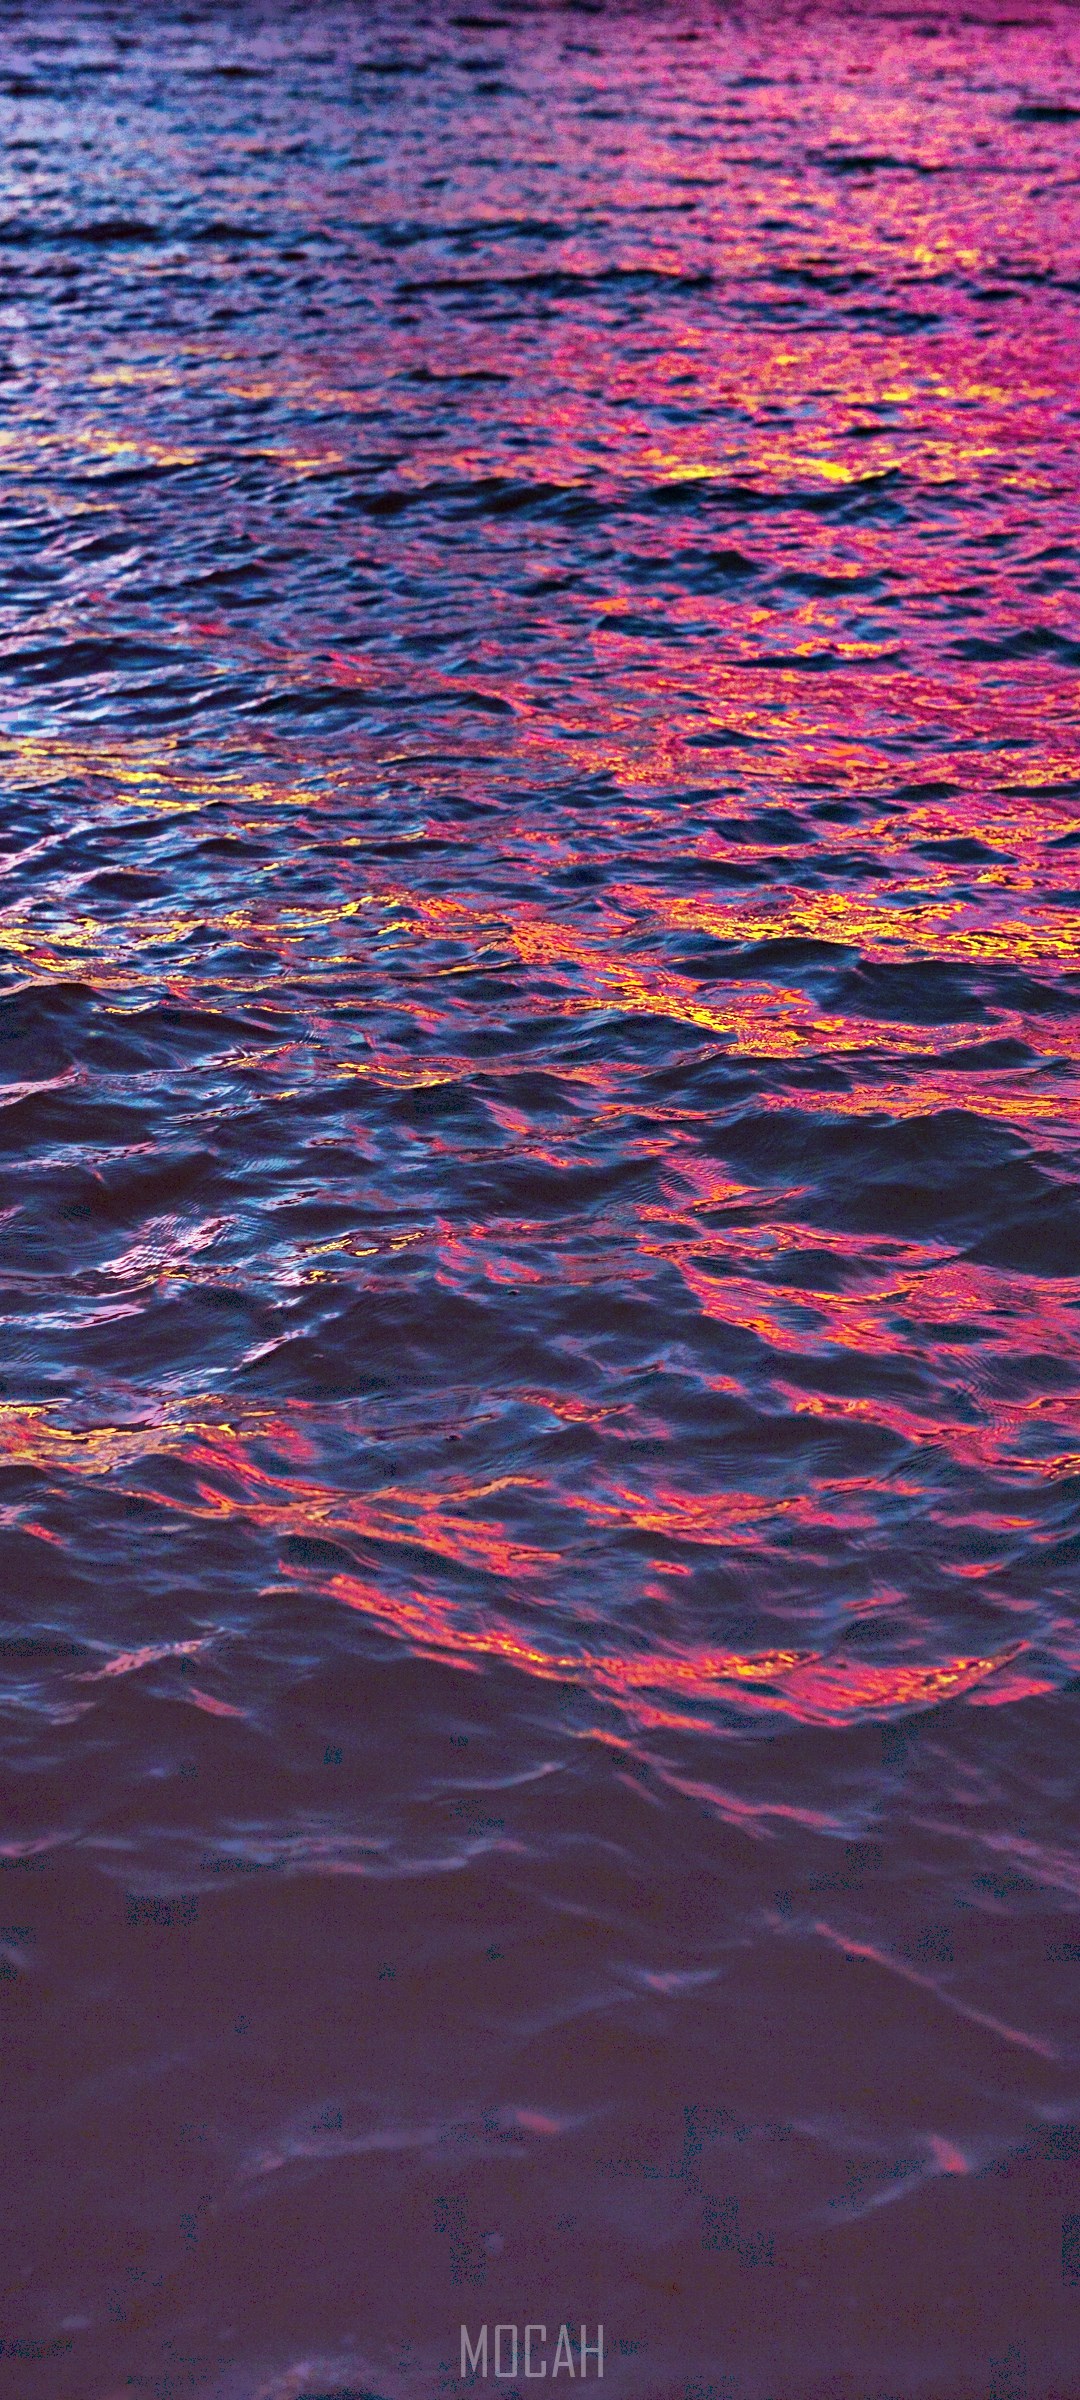 Blue water red sea horizon samsung galaxy a wallpaper free download x